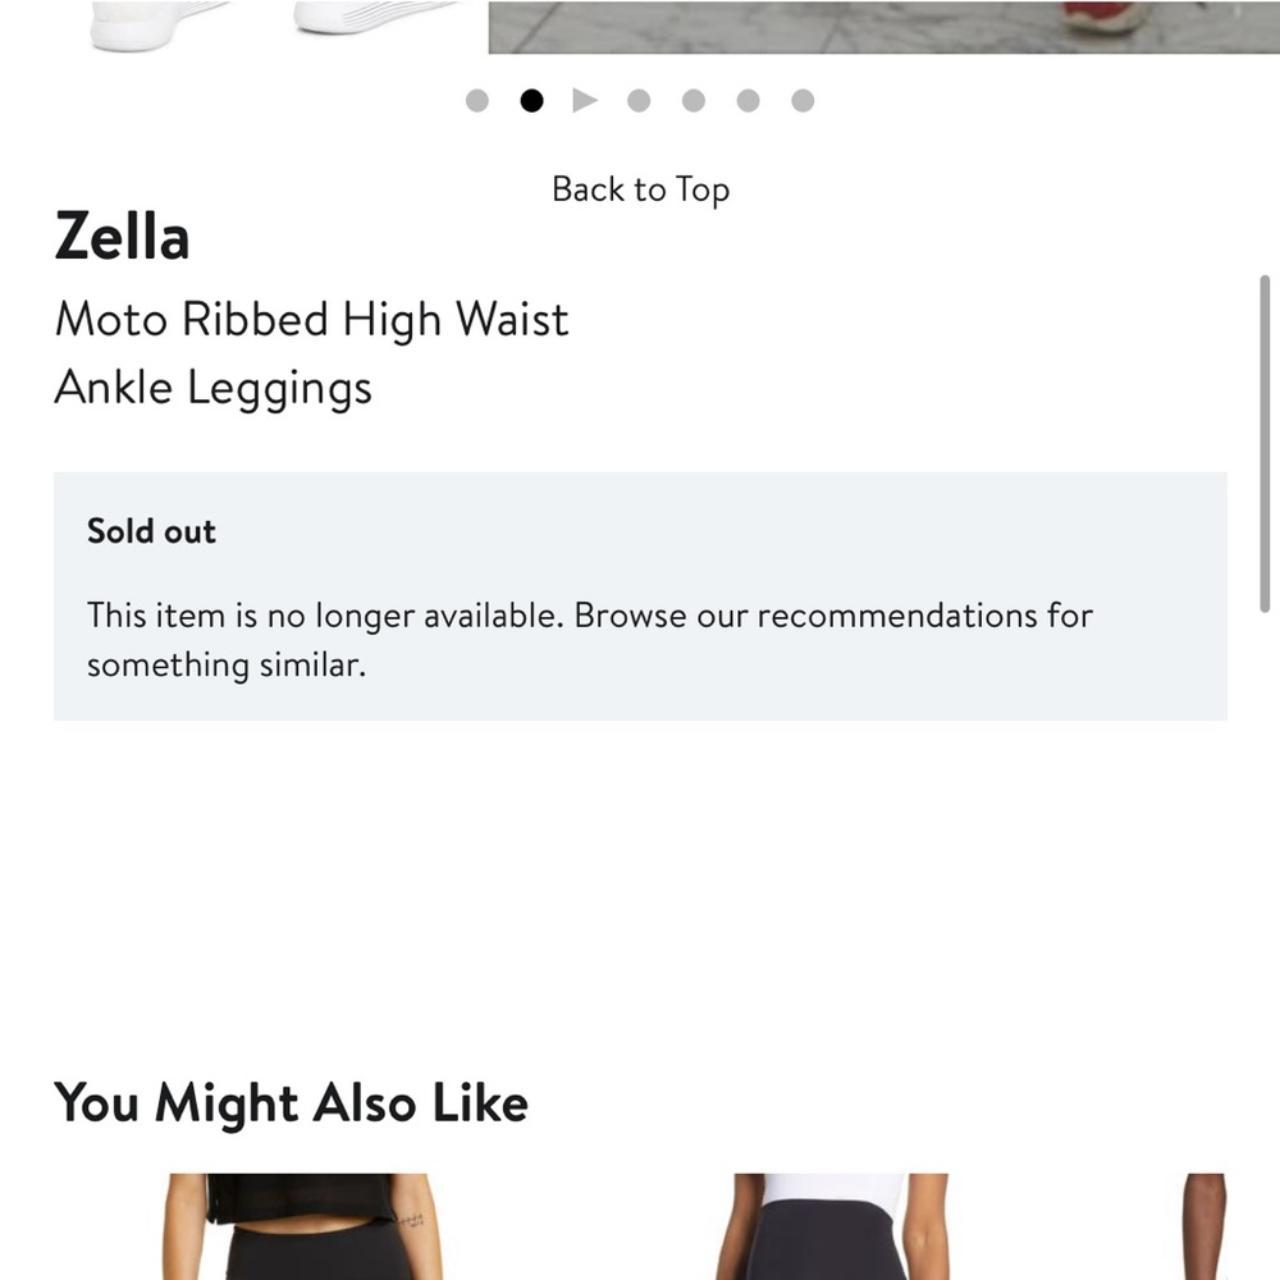 Zella + Moto Ribbed High Waist Ankle Leggings